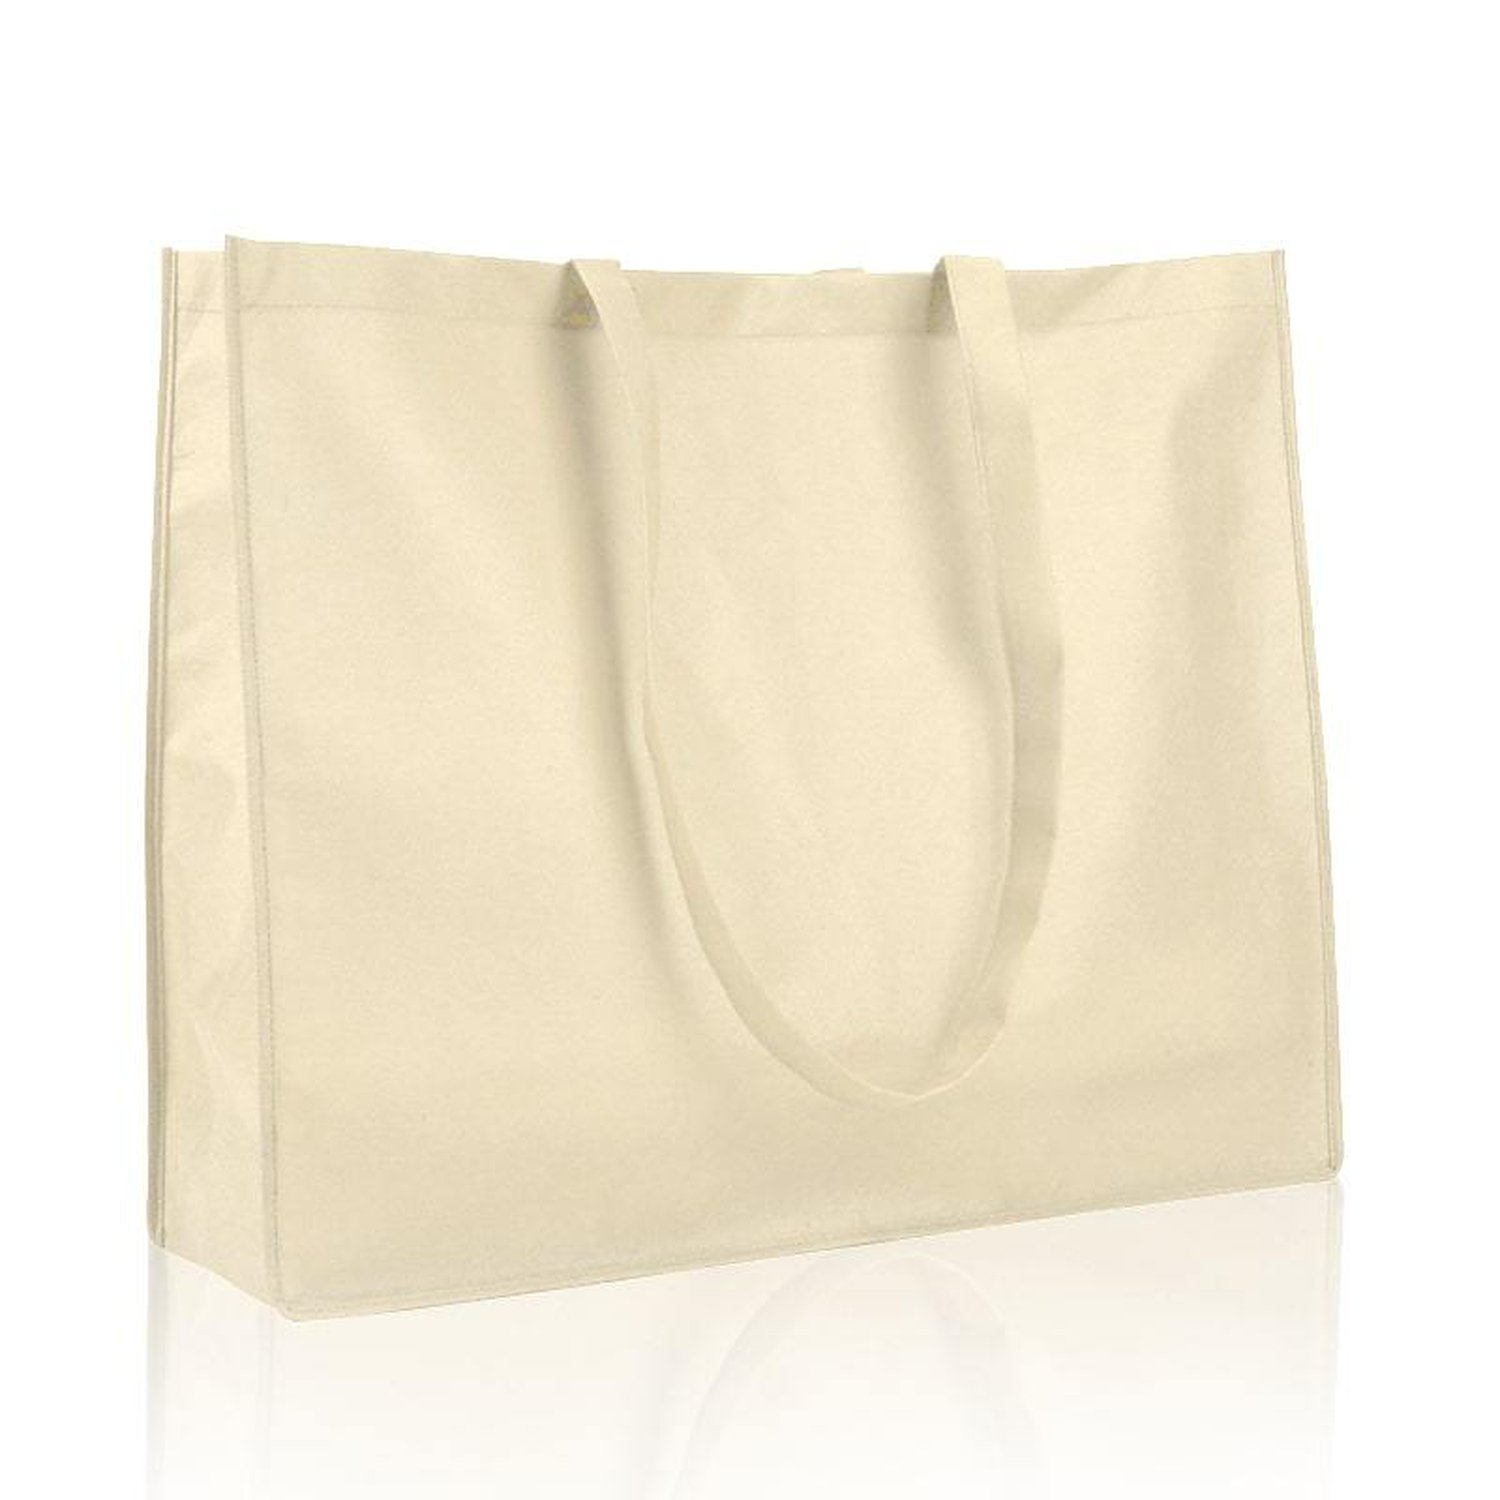 Cotton Shopping Bags x13